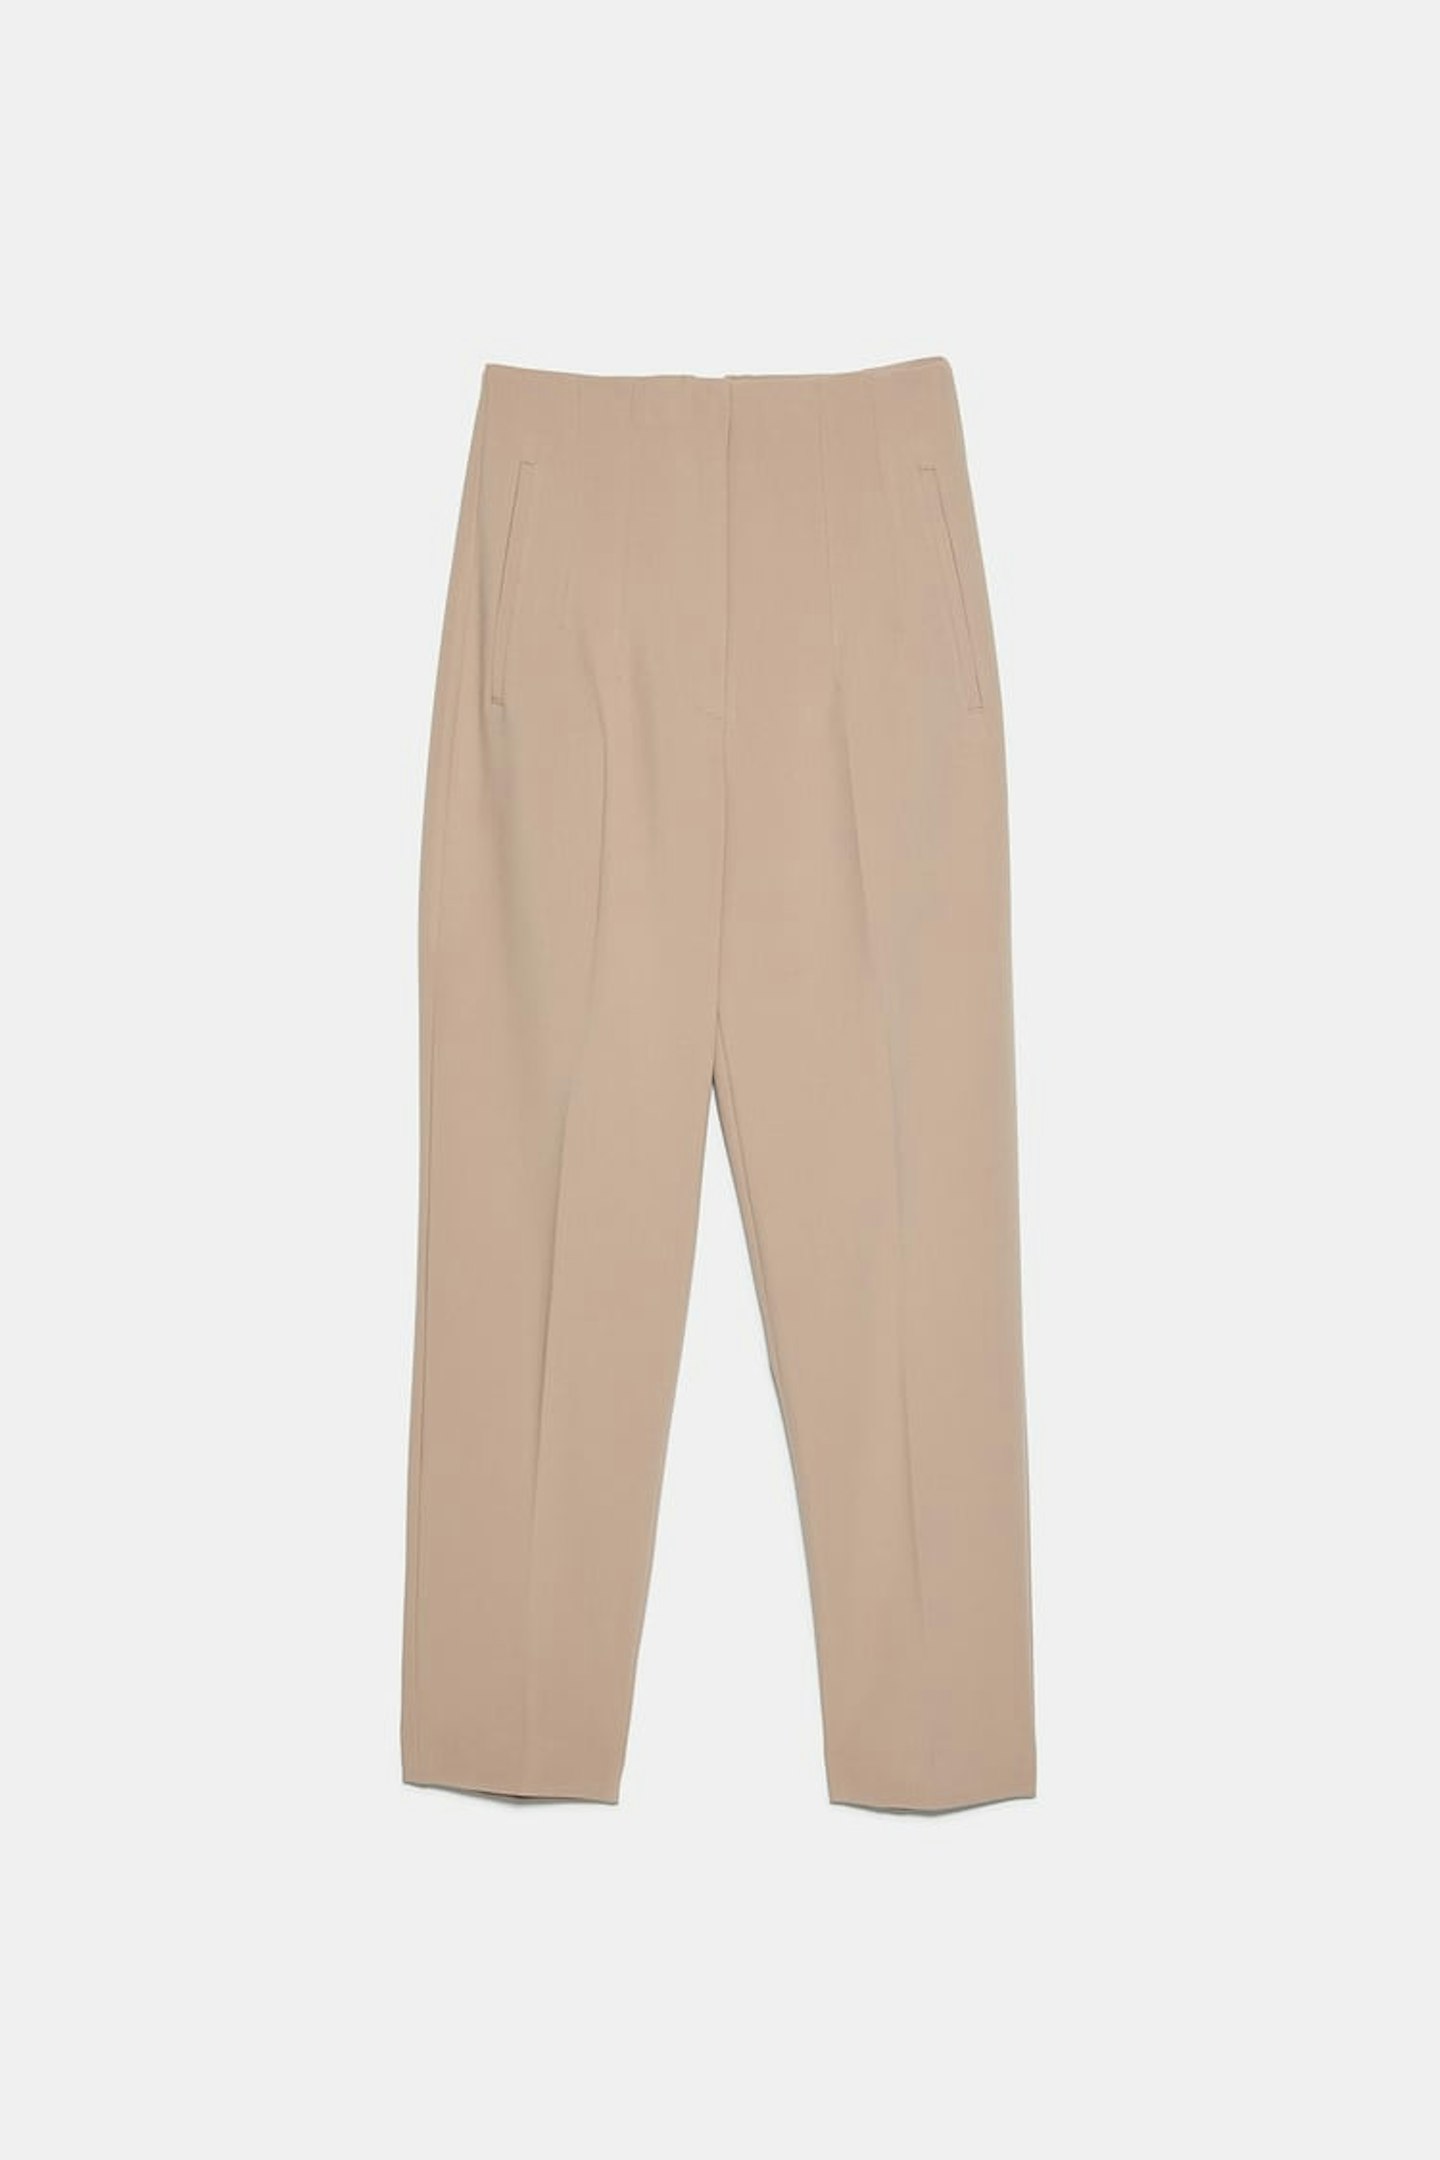 Zara, High Waisted Trousers,  £25.99